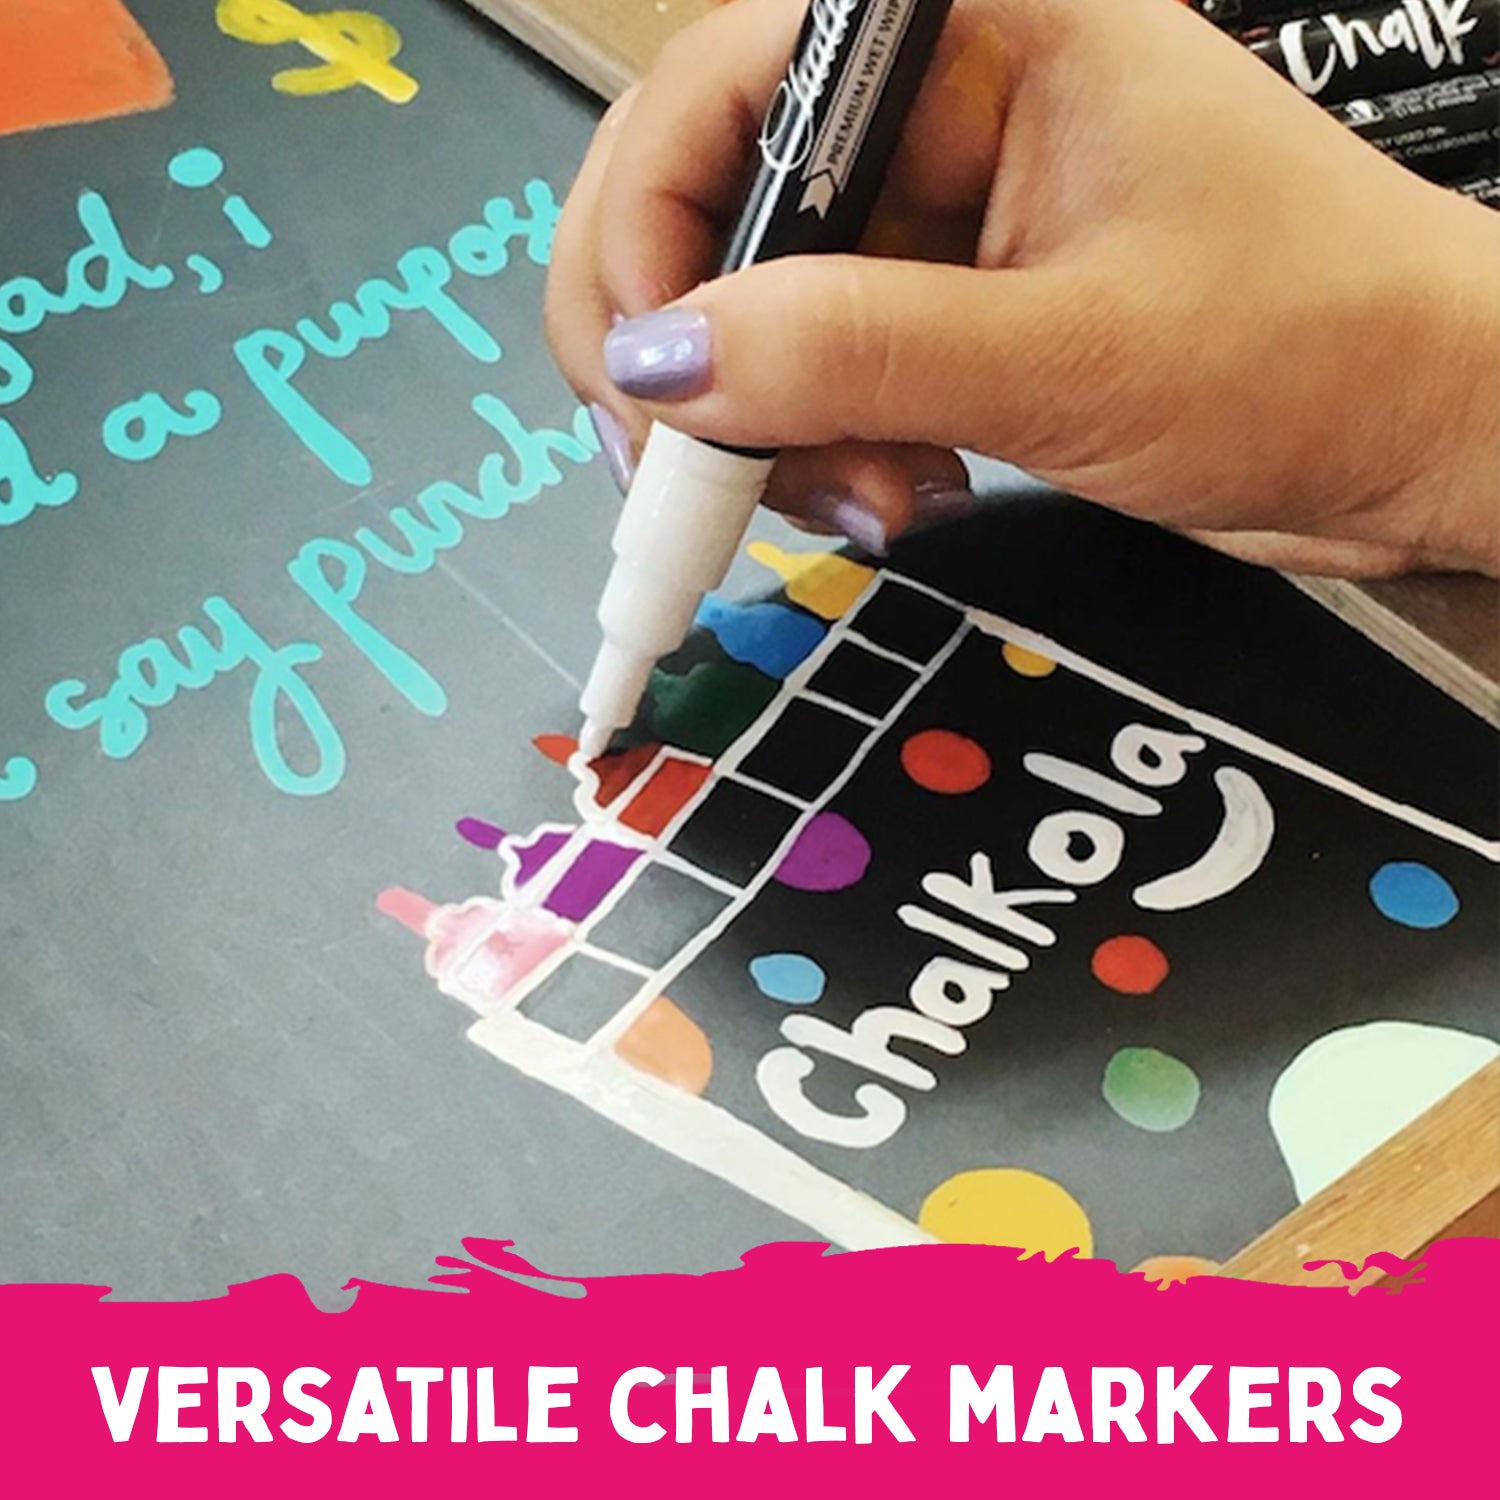 20 Chalk Markers + 20 Acrylic Markers Bundle - Chalkola Art Supply